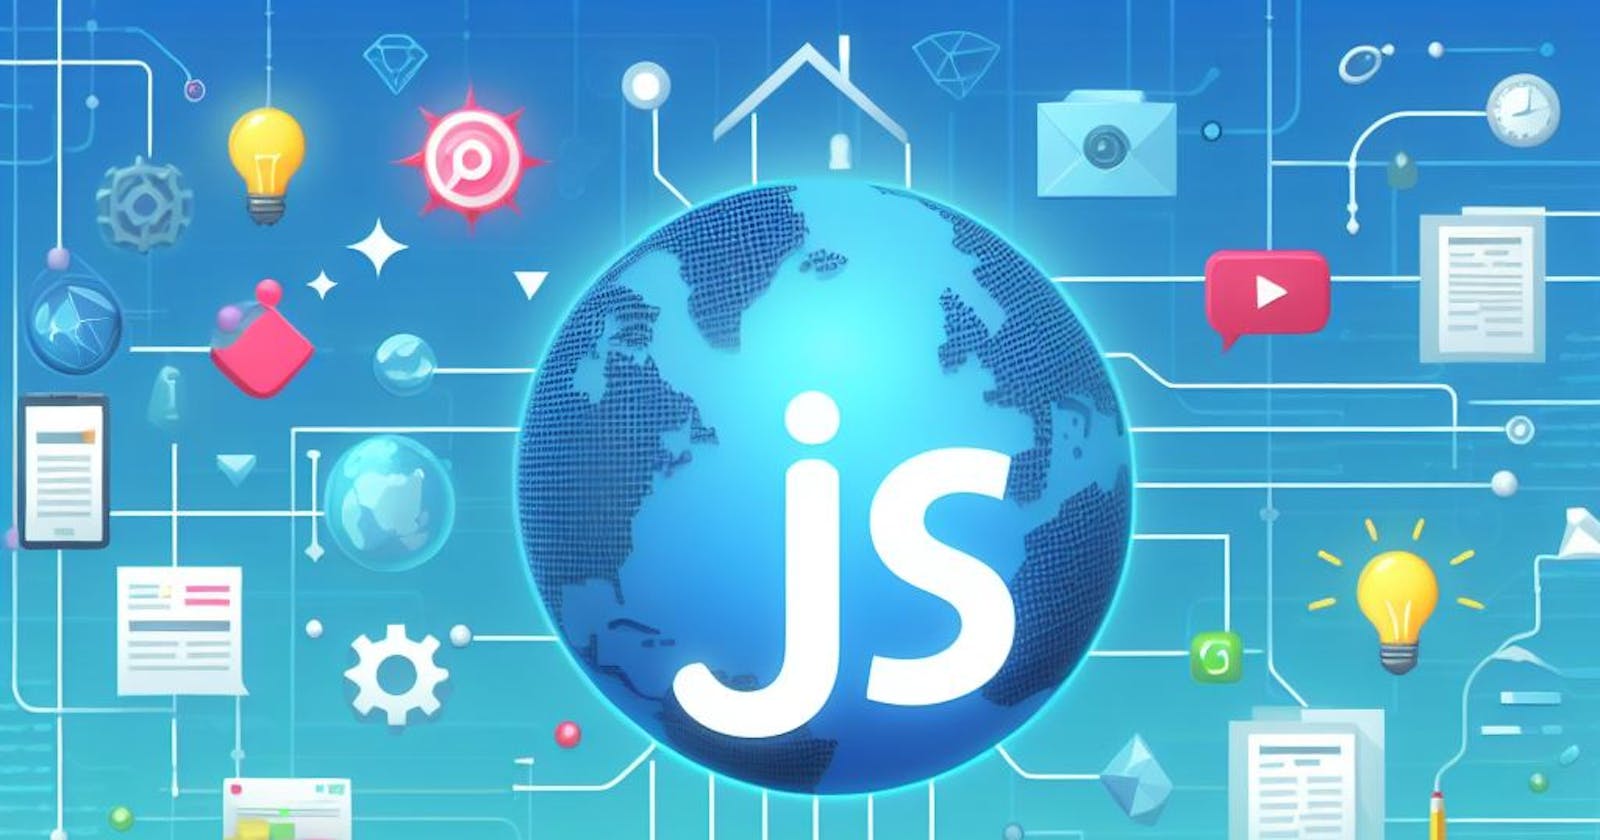 Top JavaScript Frameworks for Building Web Applications